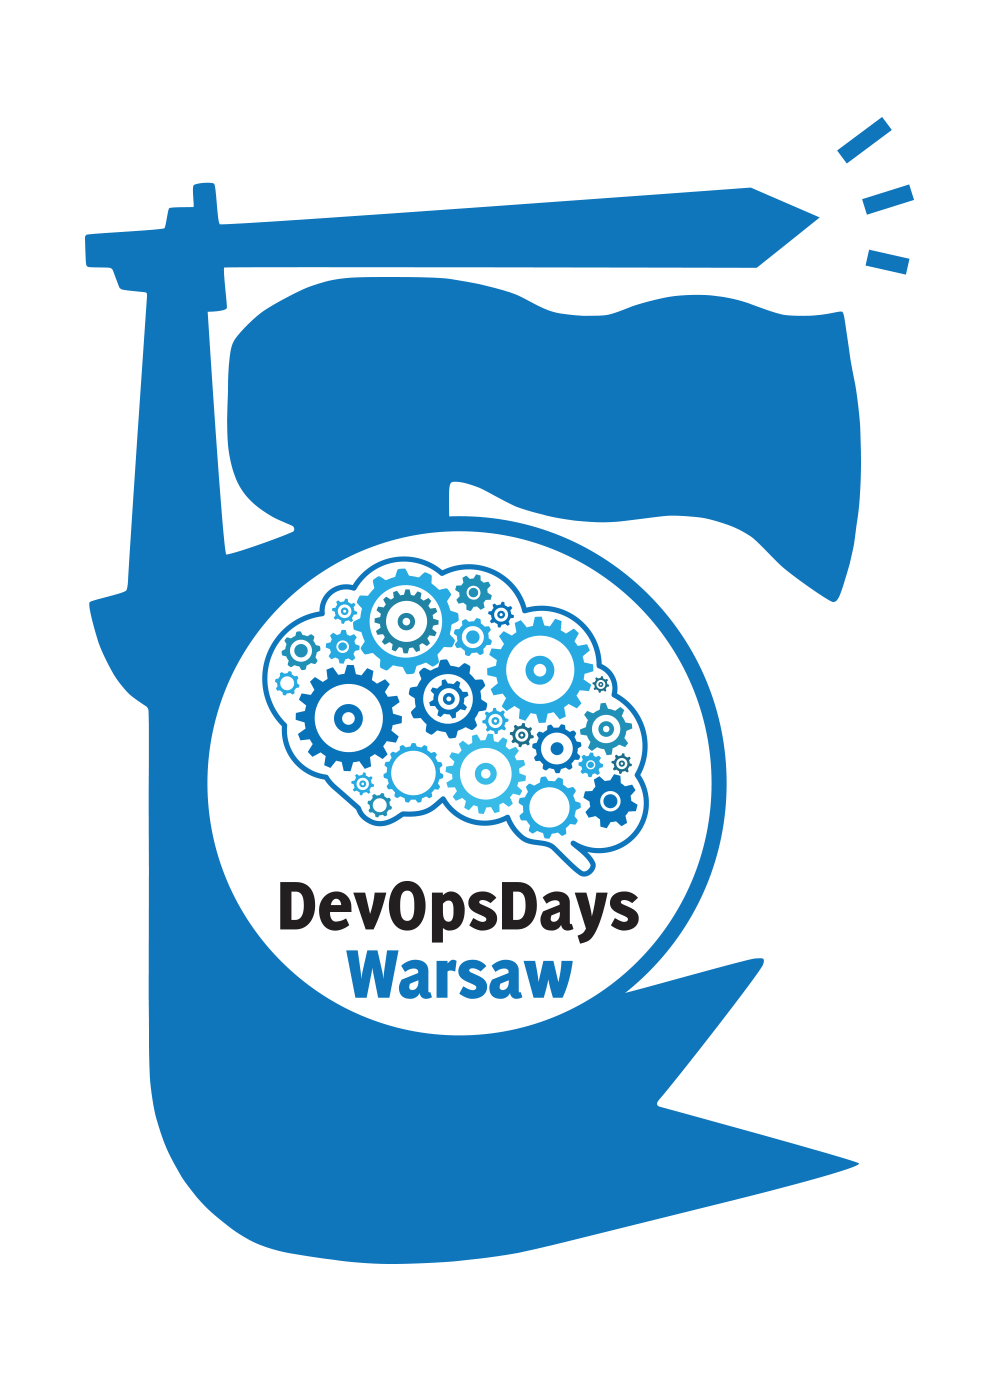 devopsdays Warsaw 2017